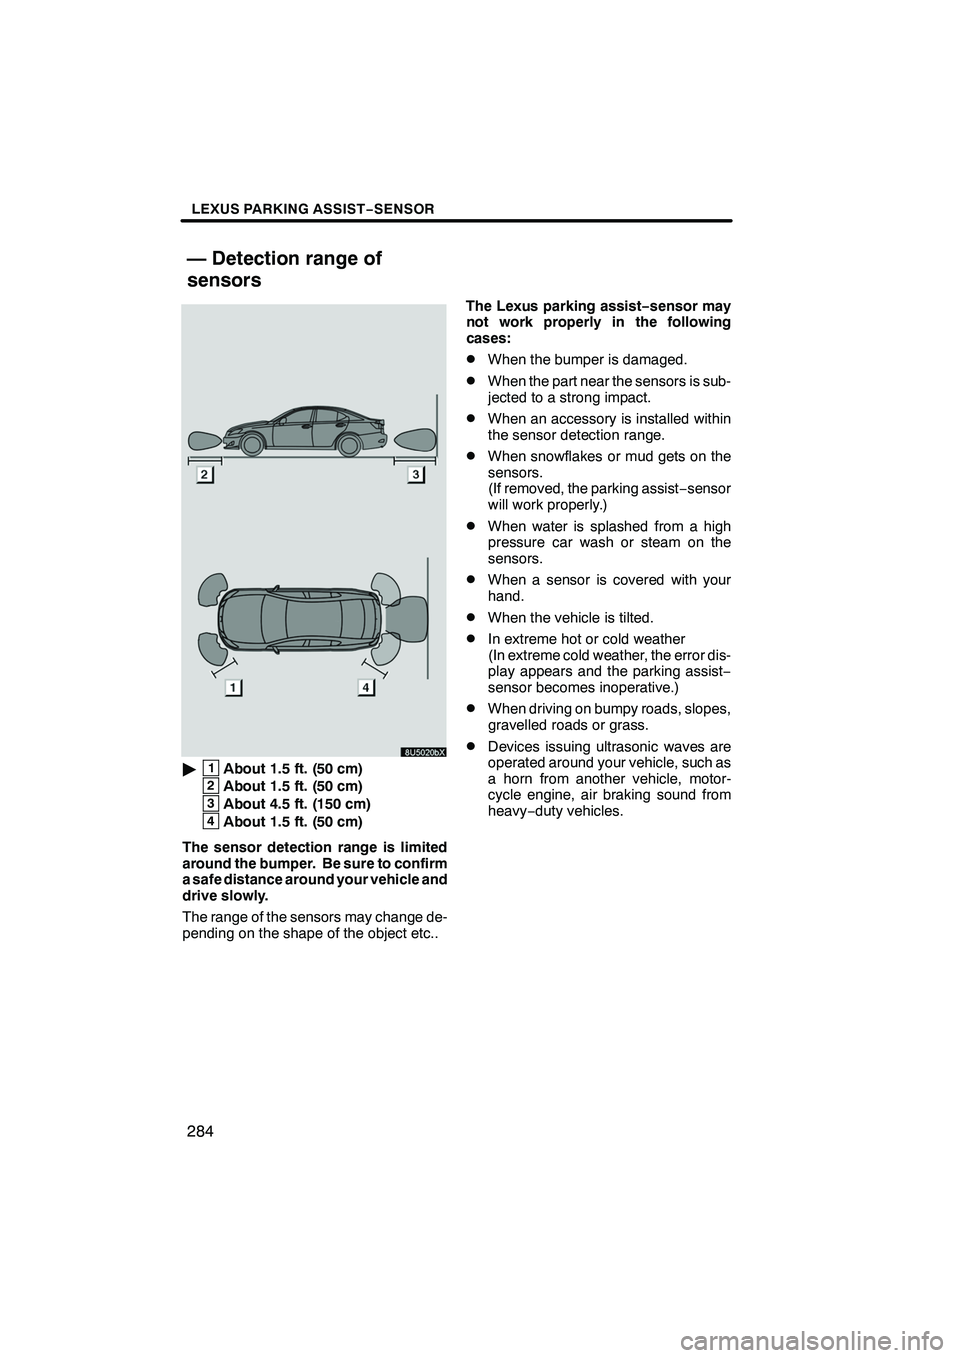 Lexus IS250 2009  Navigation Manual Finish
LEXUS PARKING ASSIST−SENSOR
284
"1About 1.5 ft. (50 cm)
2About 1.5 ft. (50 cm)
3About 4.5 ft. (150 cm)
4About 1.5 ft. (50 cm)
The sensor detection range is limited
around the bumper. Be sure 